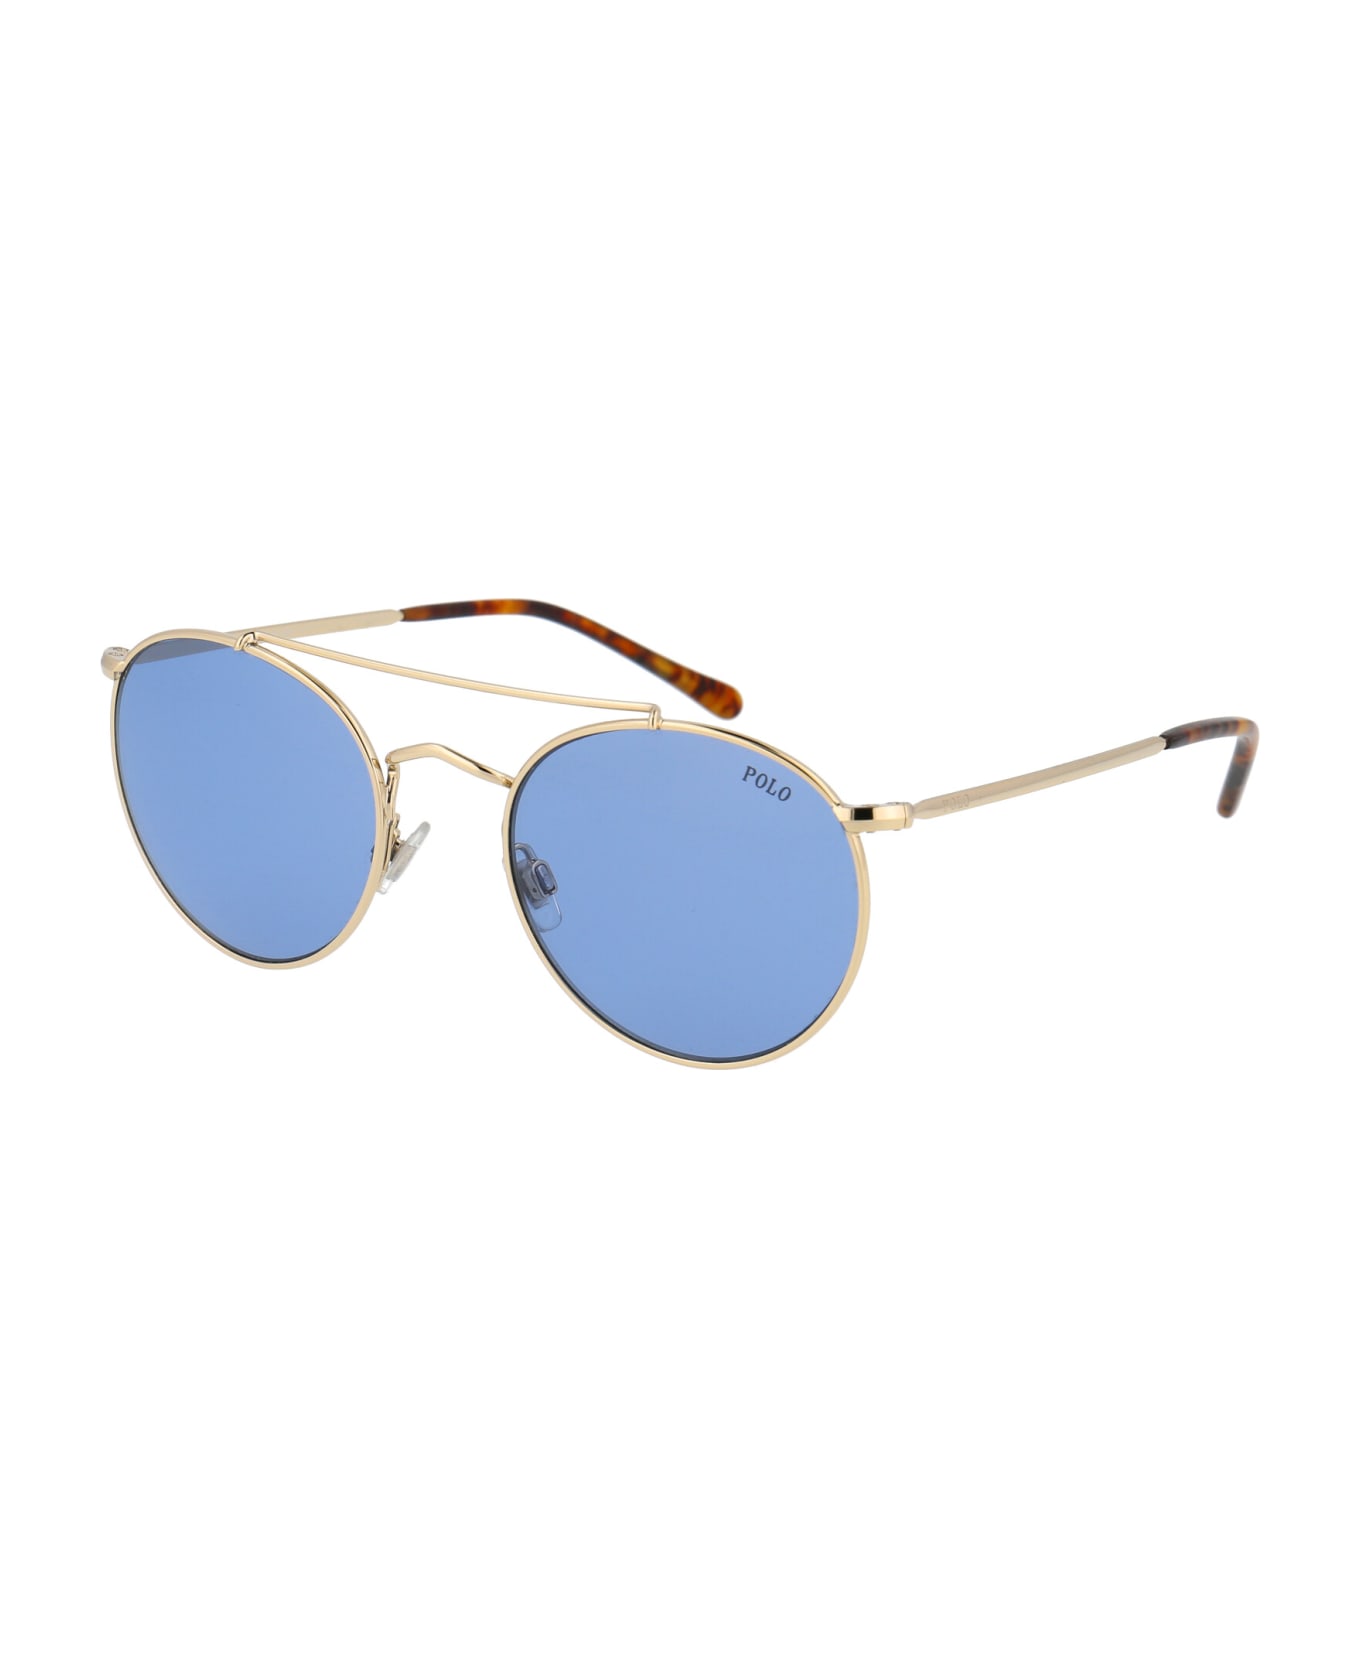 Polo Ralph Lauren 0ph3114 Sunglasses - 911672 SHINY PALE GOLD